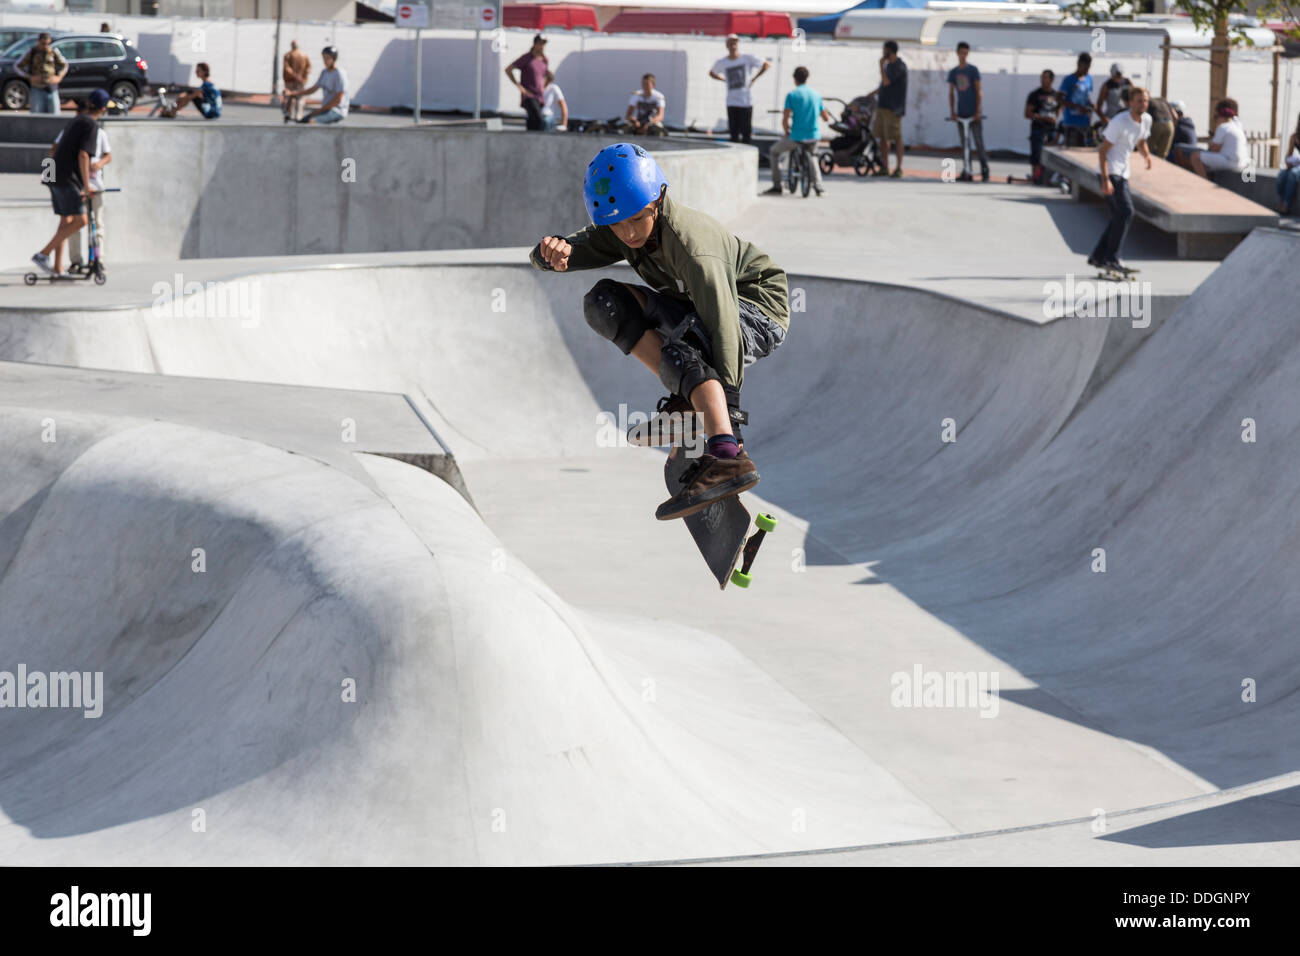 in der Luft Skateboarder, Plainpalais Skatepark, Genf, Schweiz  Stockfotografie - Alamy